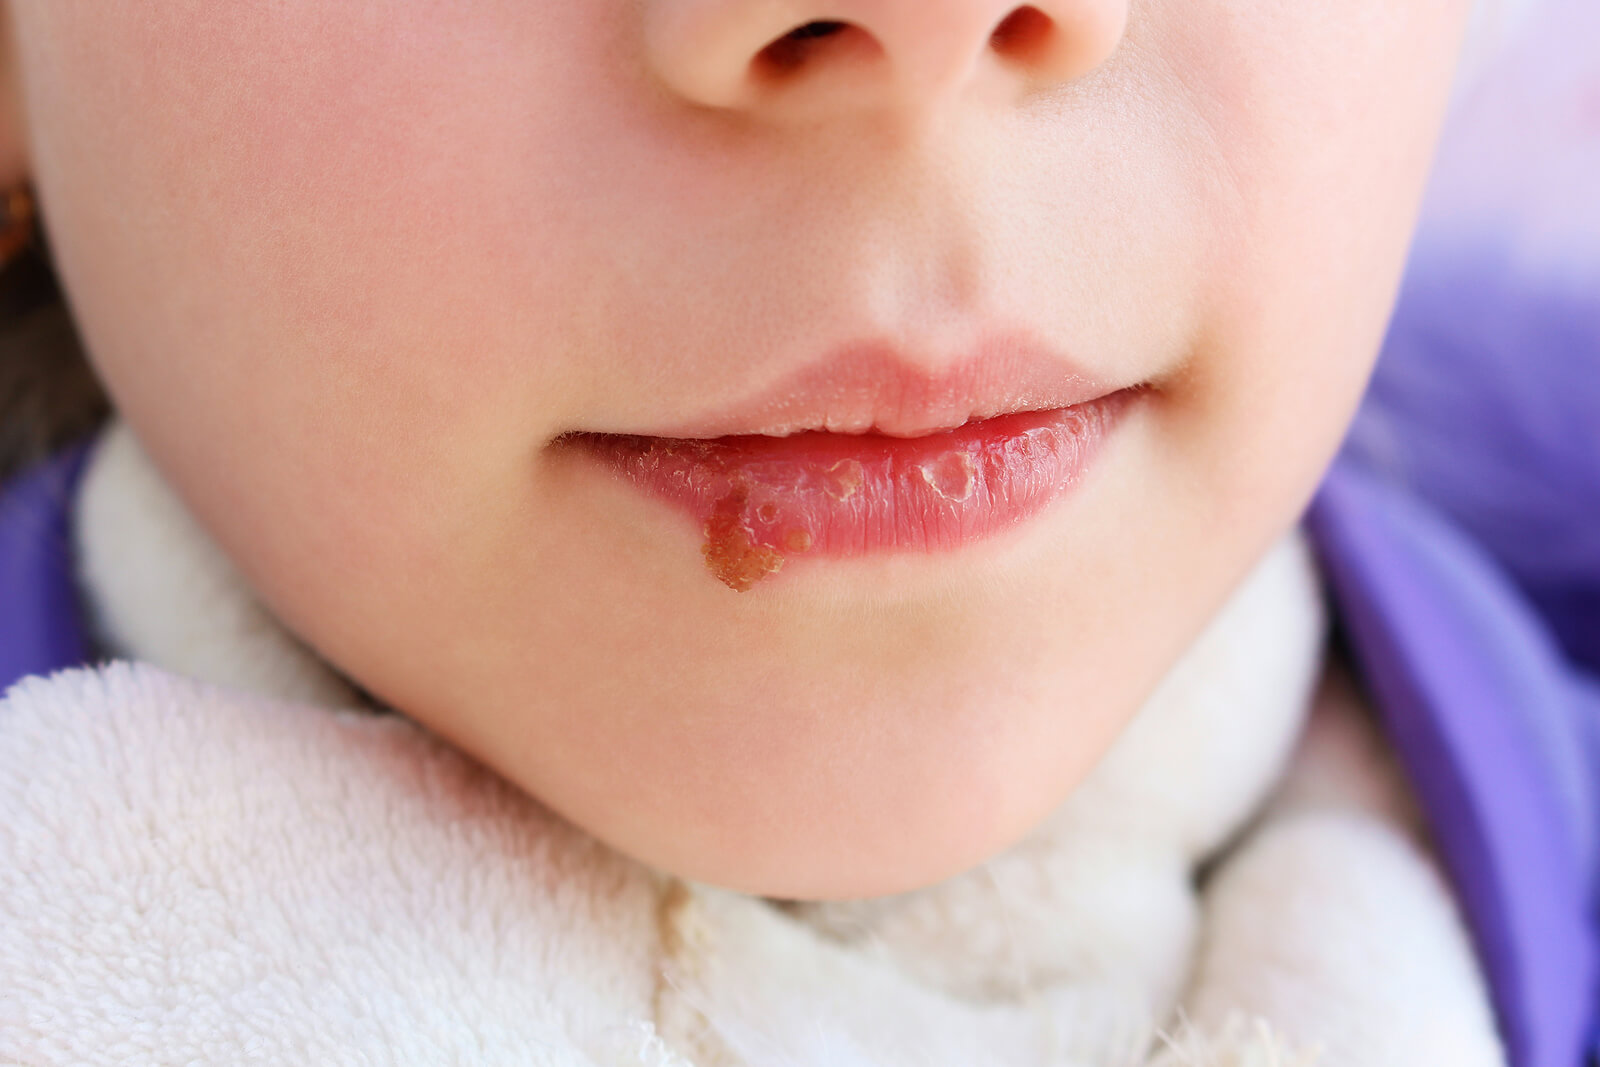 Niño con candidiasis oral.